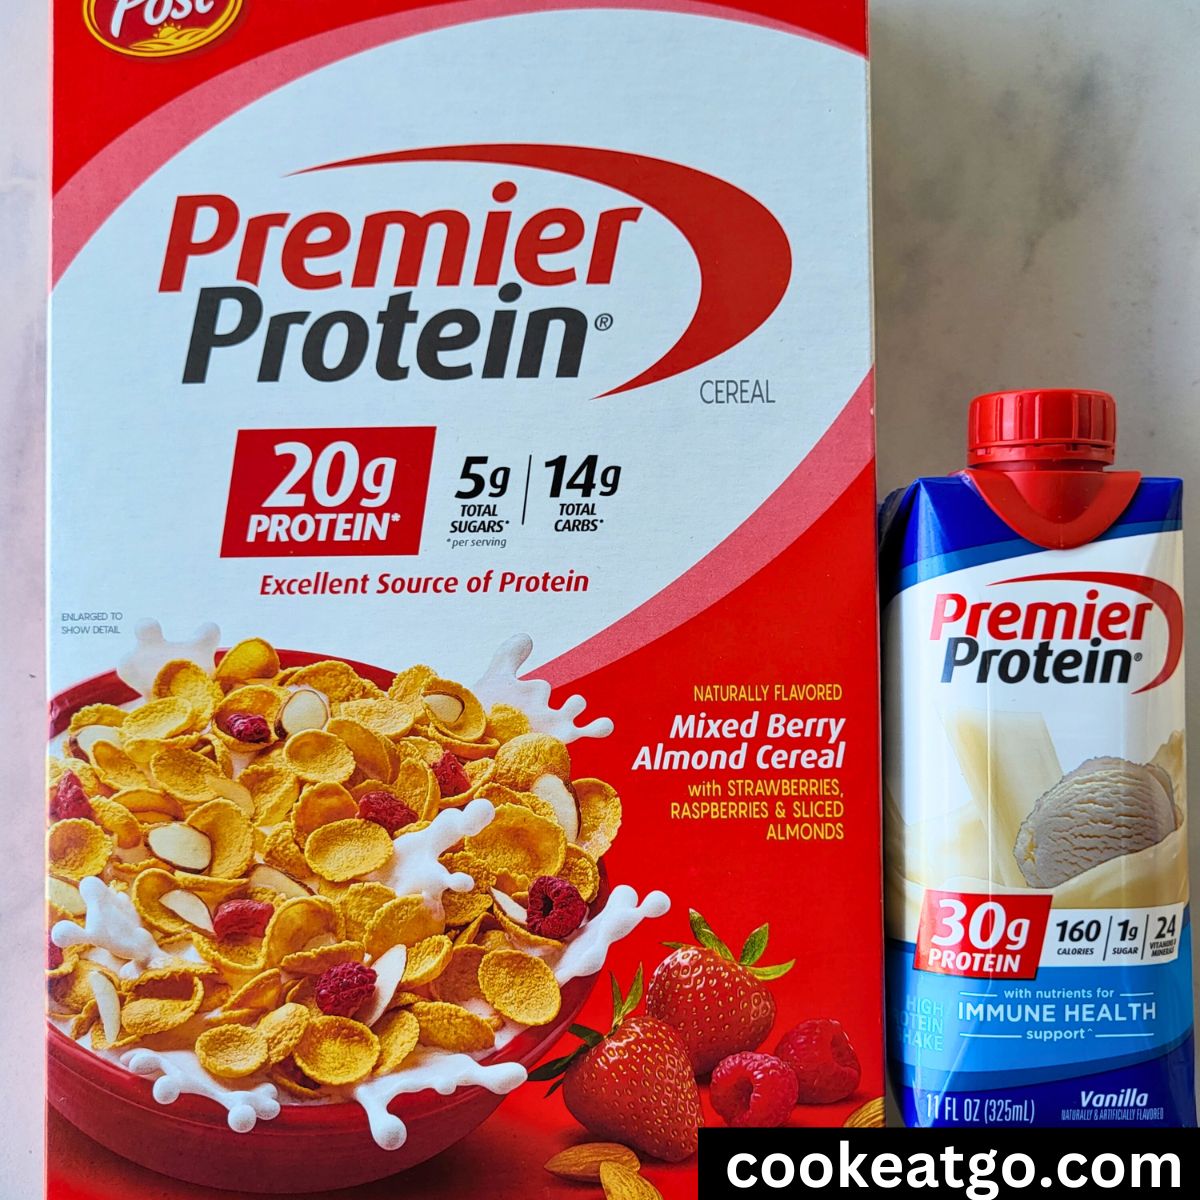 Mixed Berry Almond Preimer Protein Cereal Box next to premier protein vanilla shake